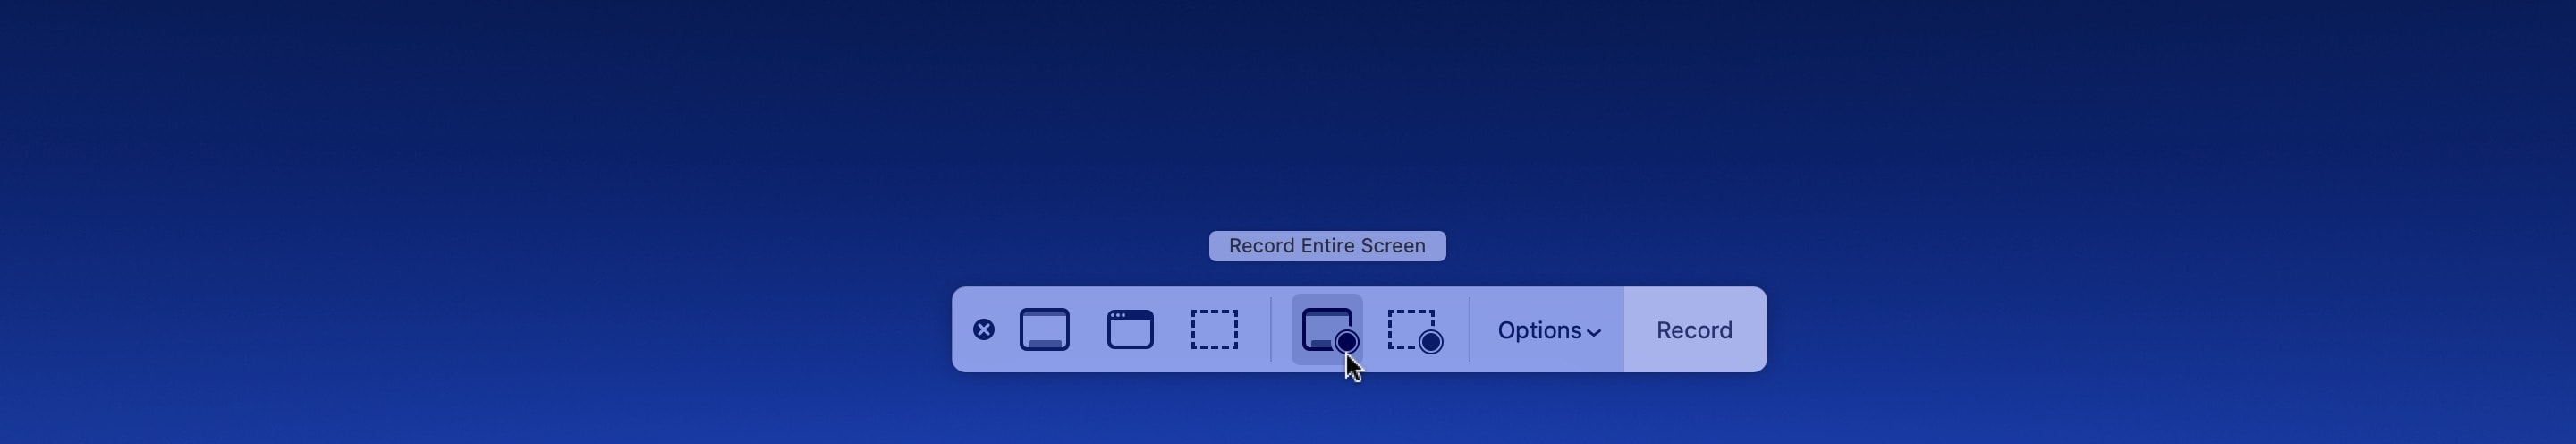 Screenshot App - Record Entire Screen